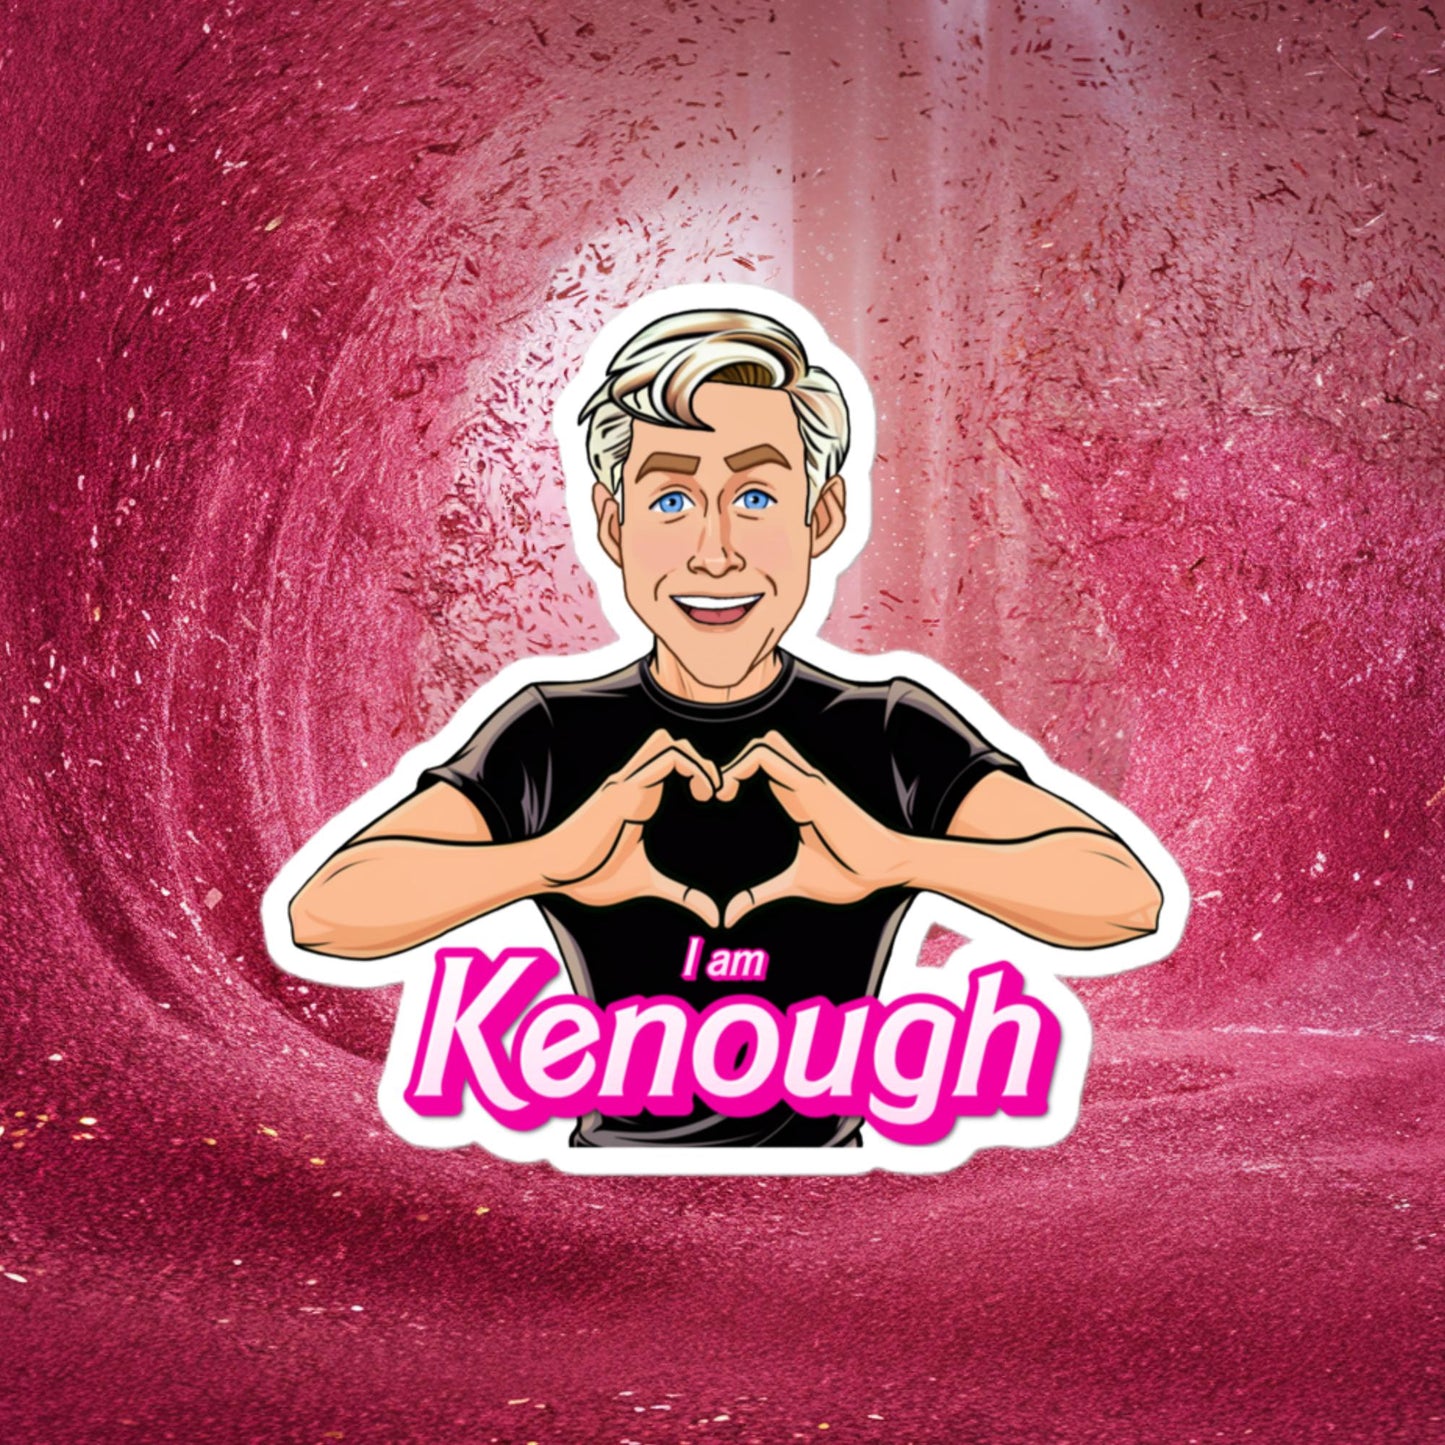 I am Kenough Ryan Gosling Ken Barbie Movie Bubble-free stickers Next Cult Brand